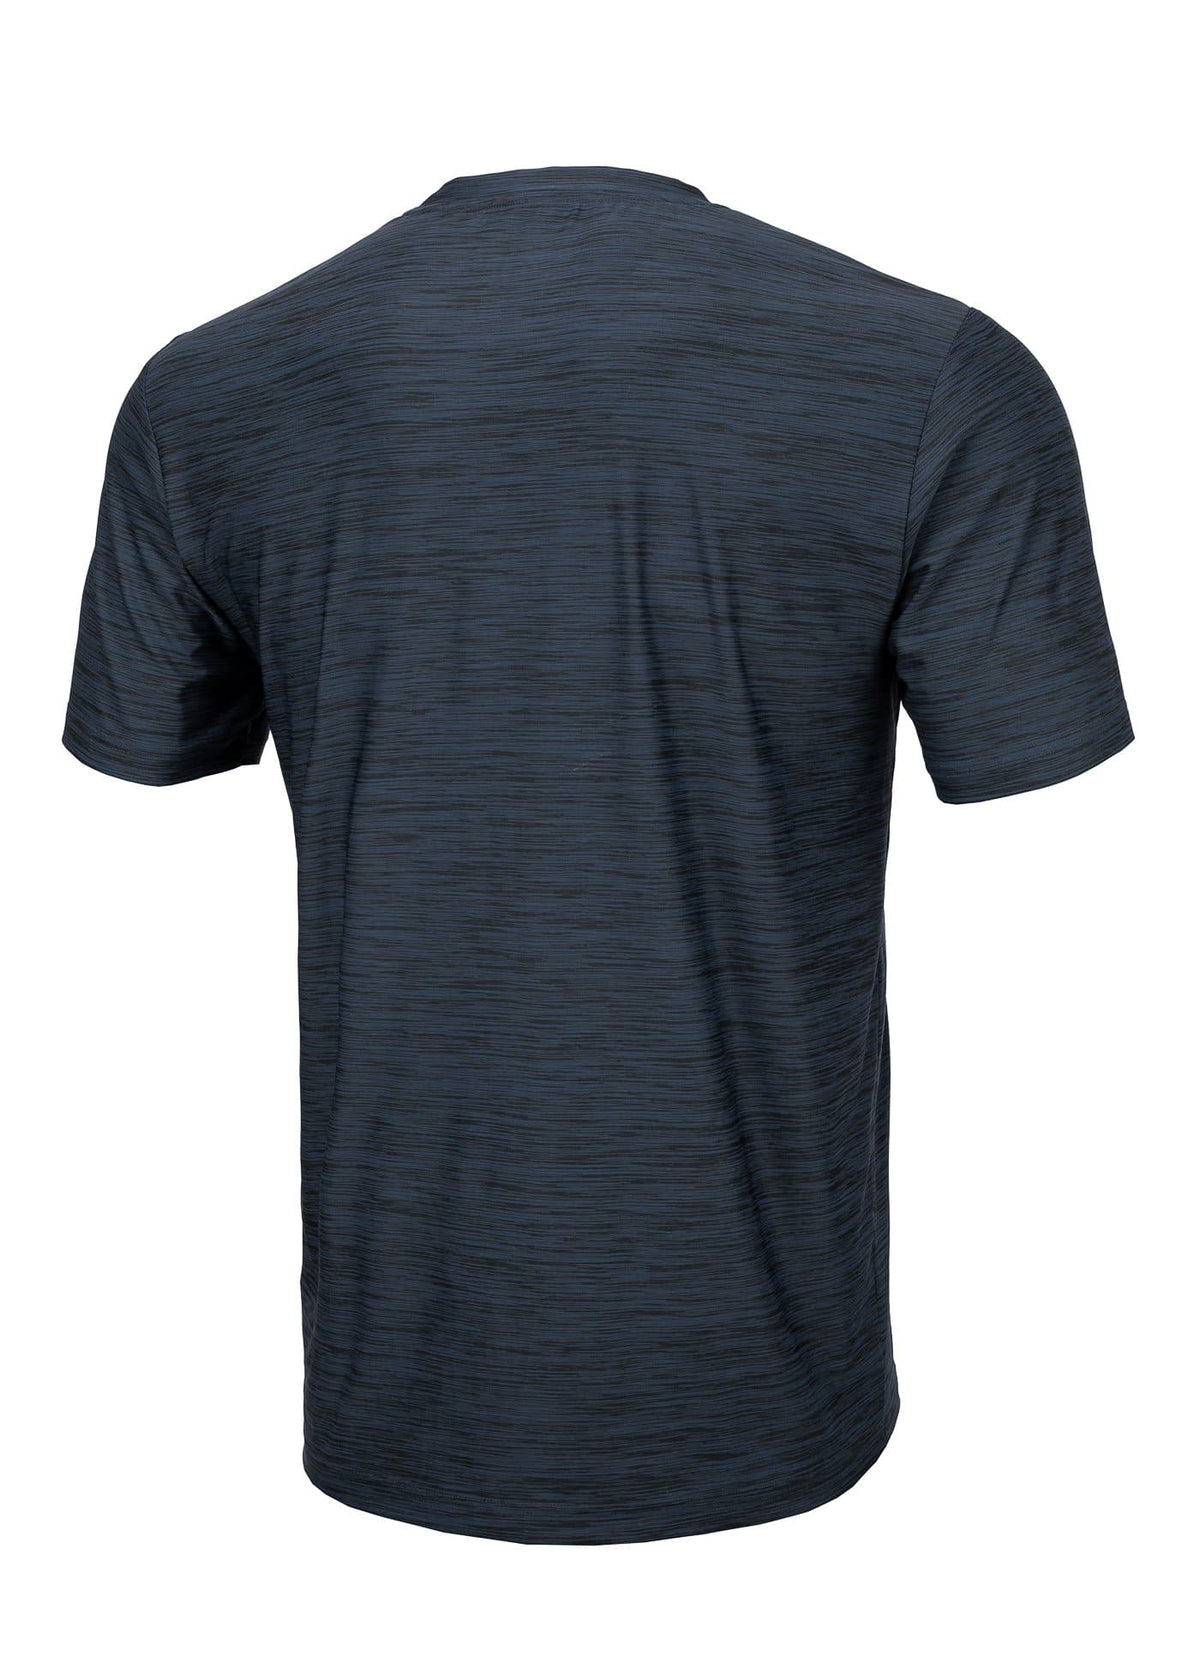 T-shirt Middleweight HILLTOP Navy Melange - Pitbull West Coast International Store 